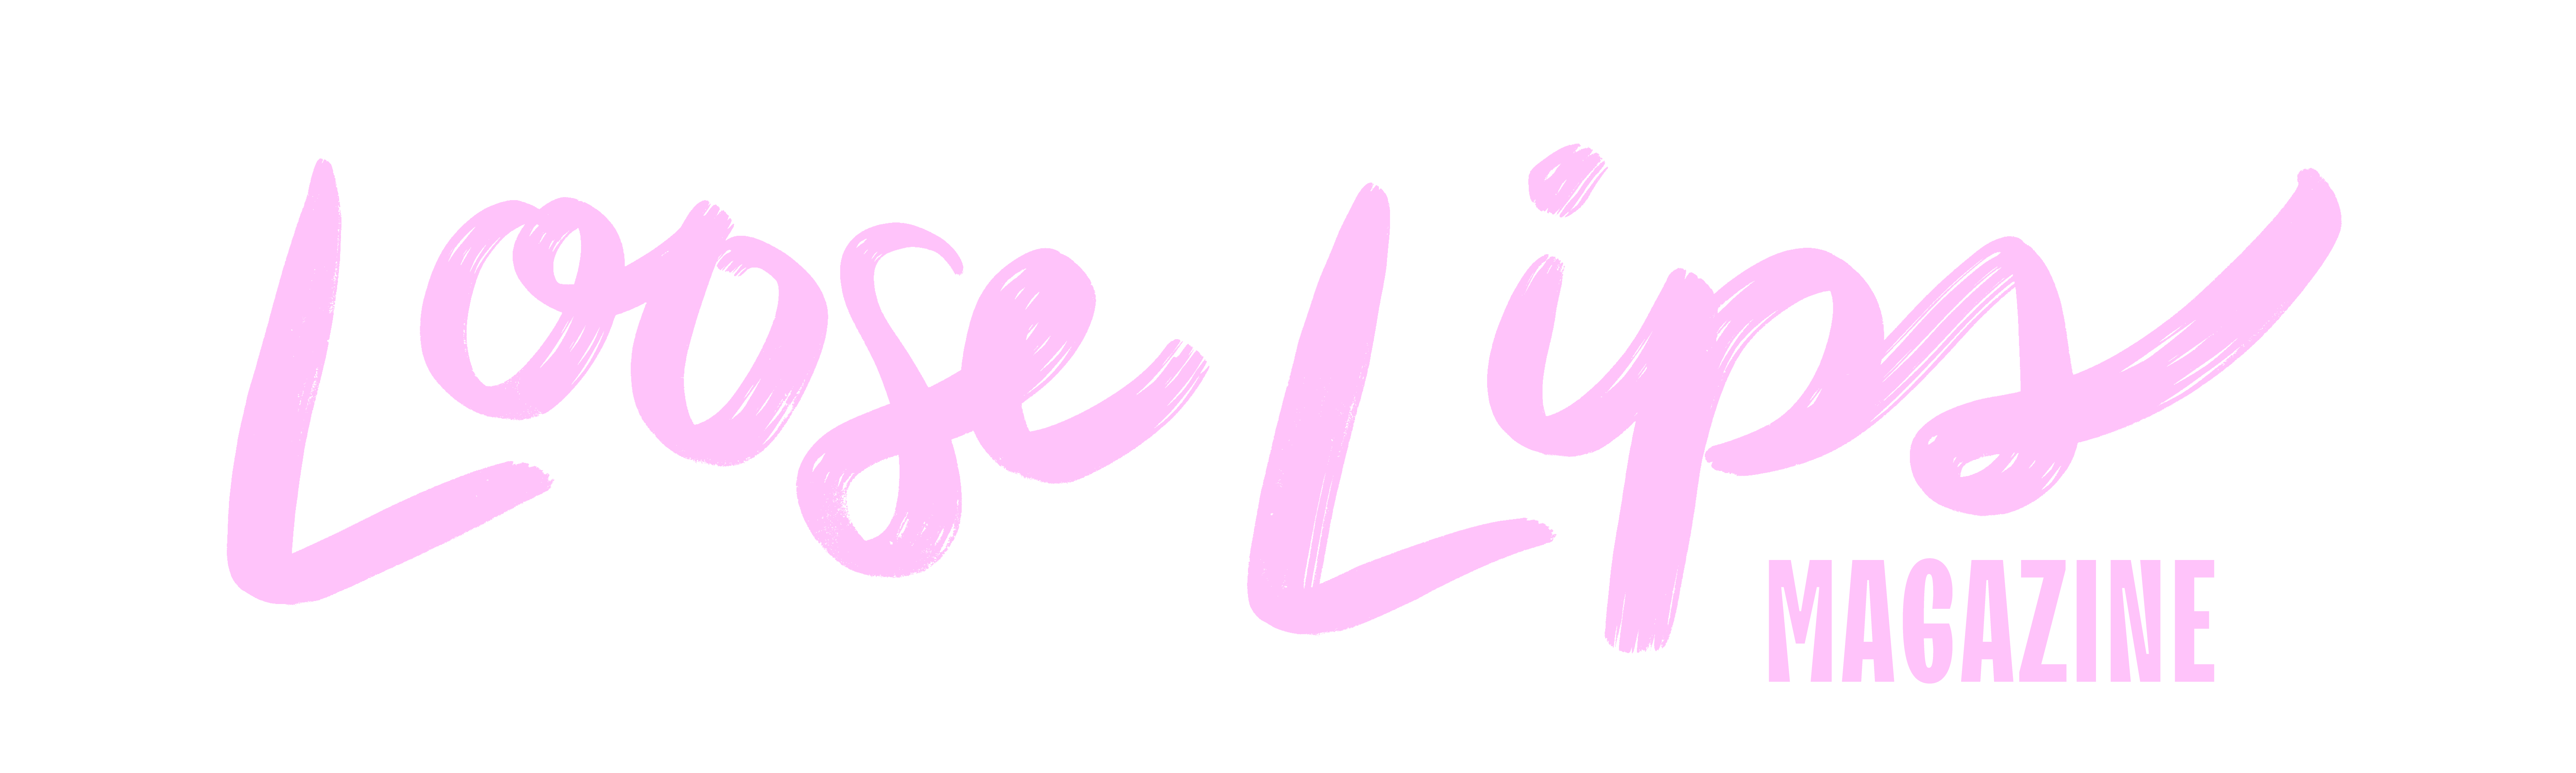 loose lips magazine logo lilac